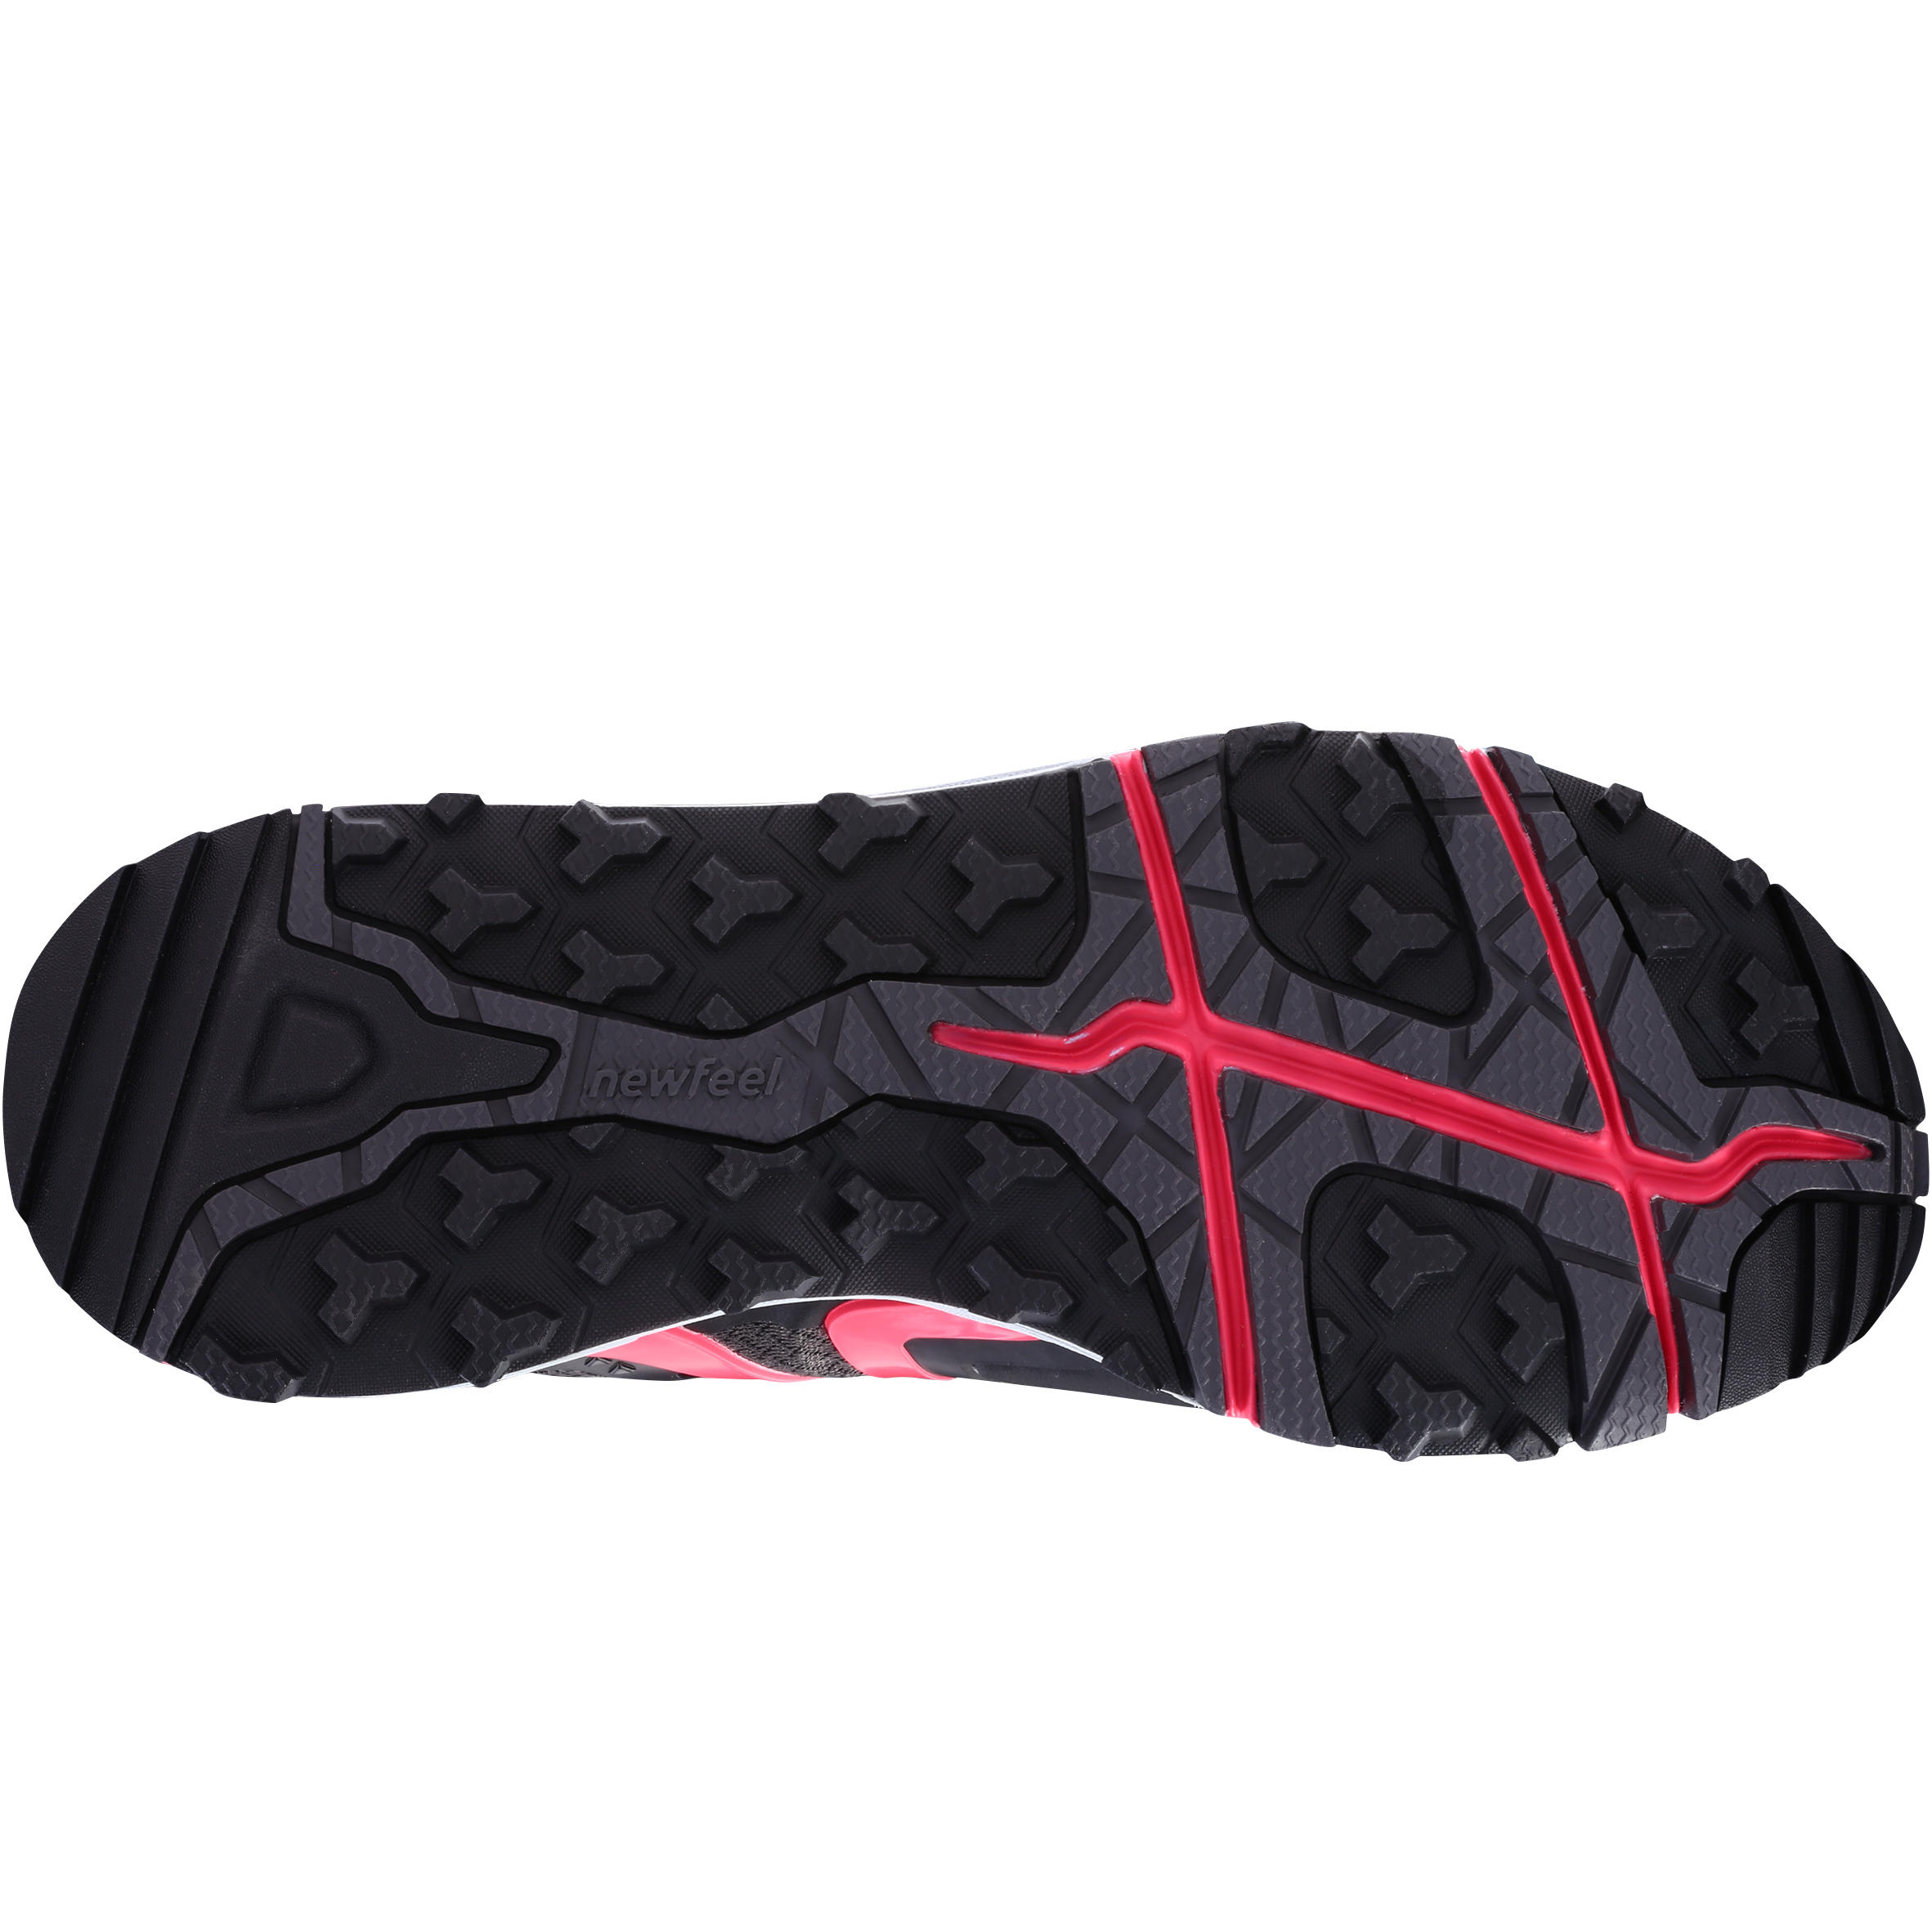 NW 900 Flex-H women's Nordic walking shoes black/pink 3/6